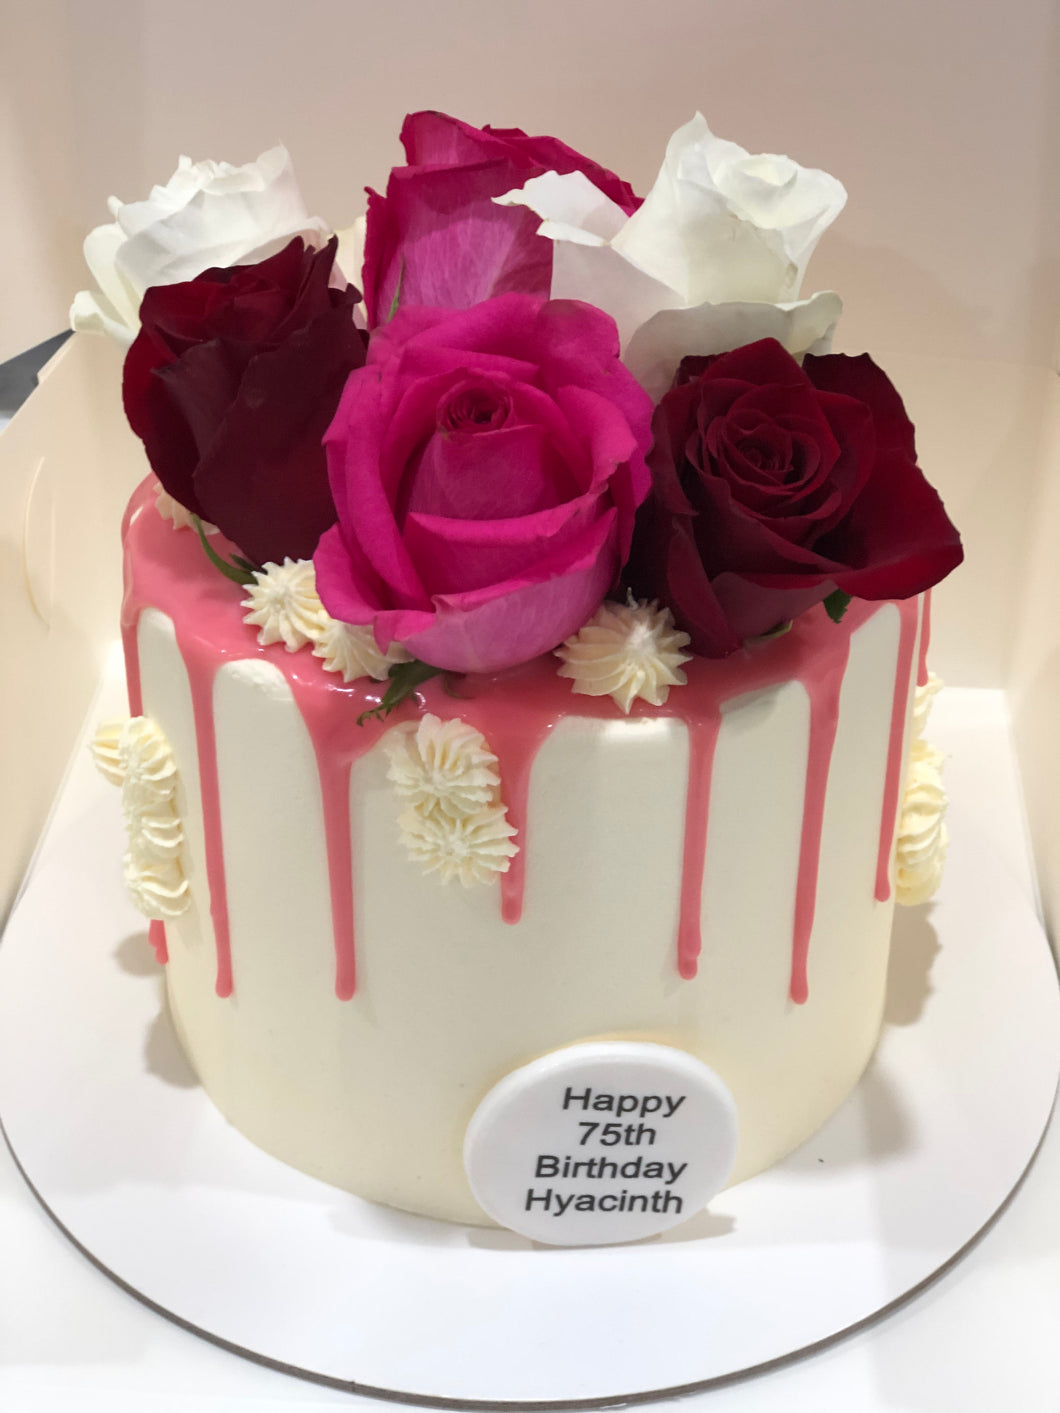 6” Rosina Cake